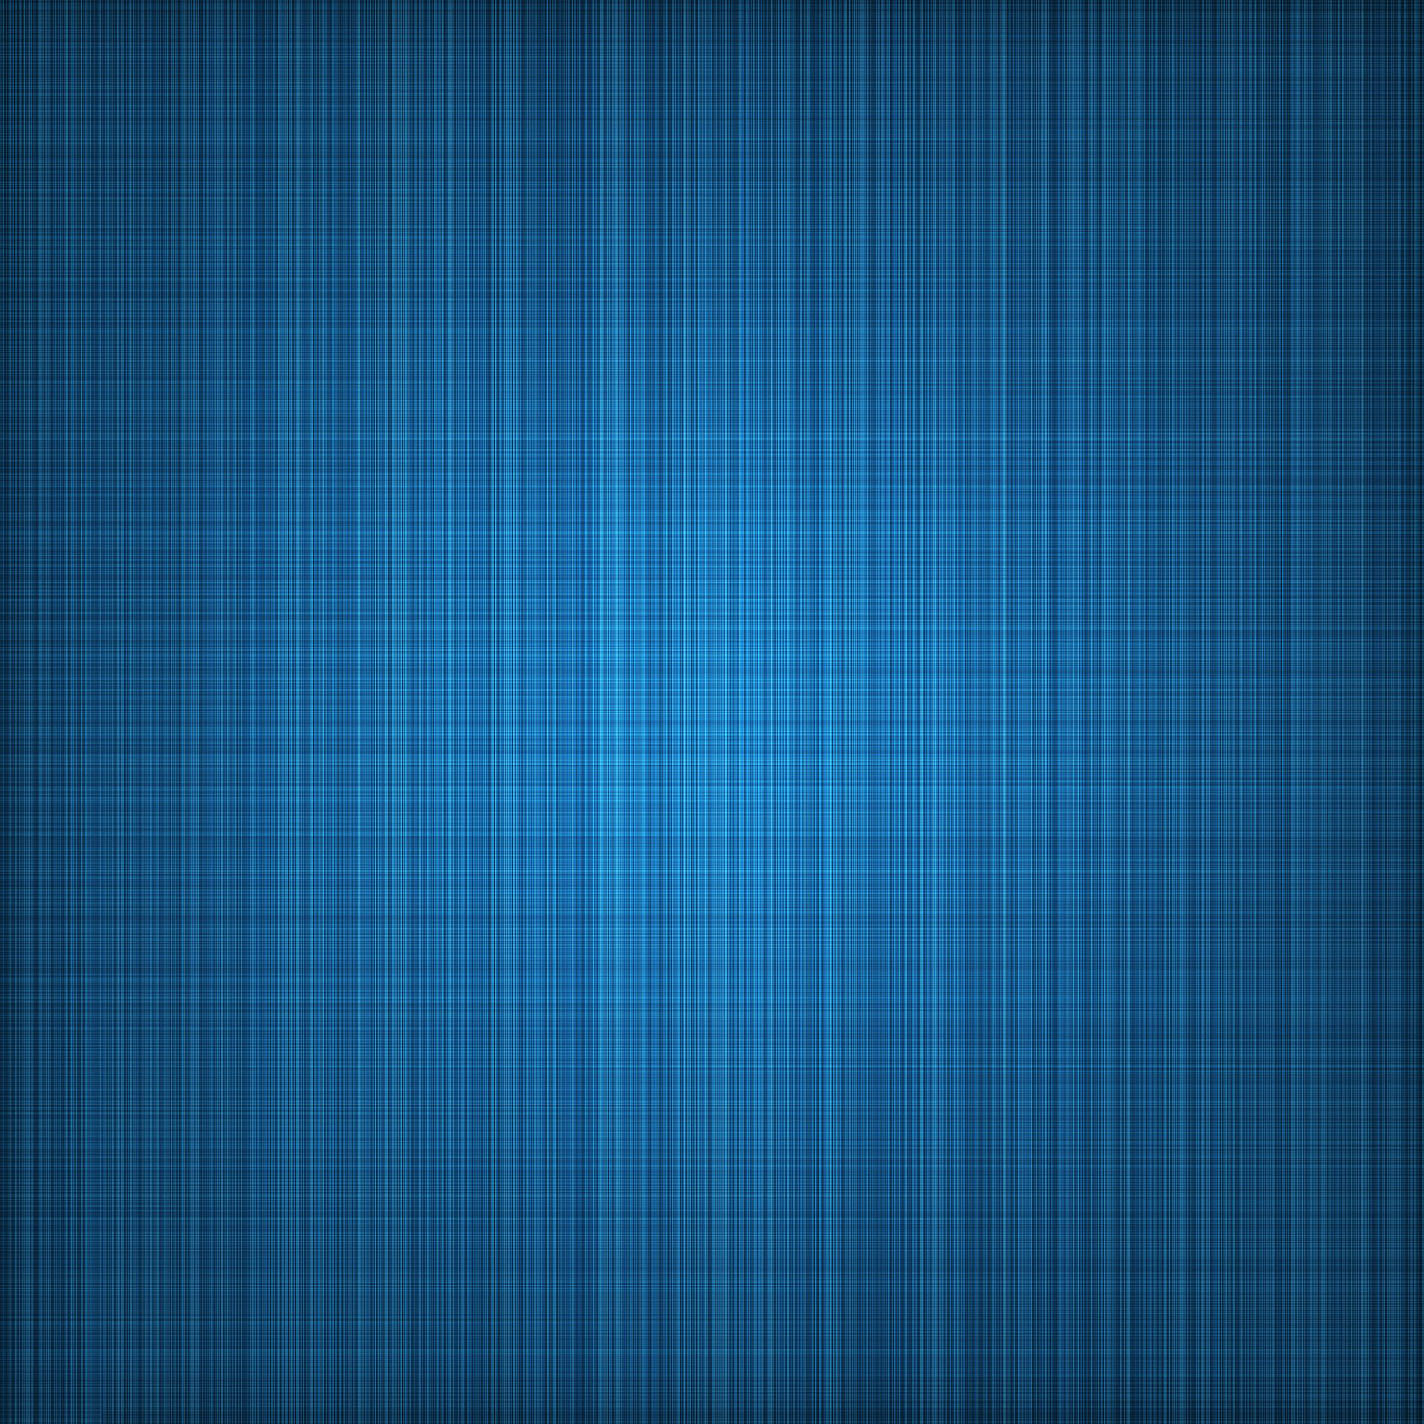 Ios7 Blue Linen Parallax HD iPhone iPad Wallpaper